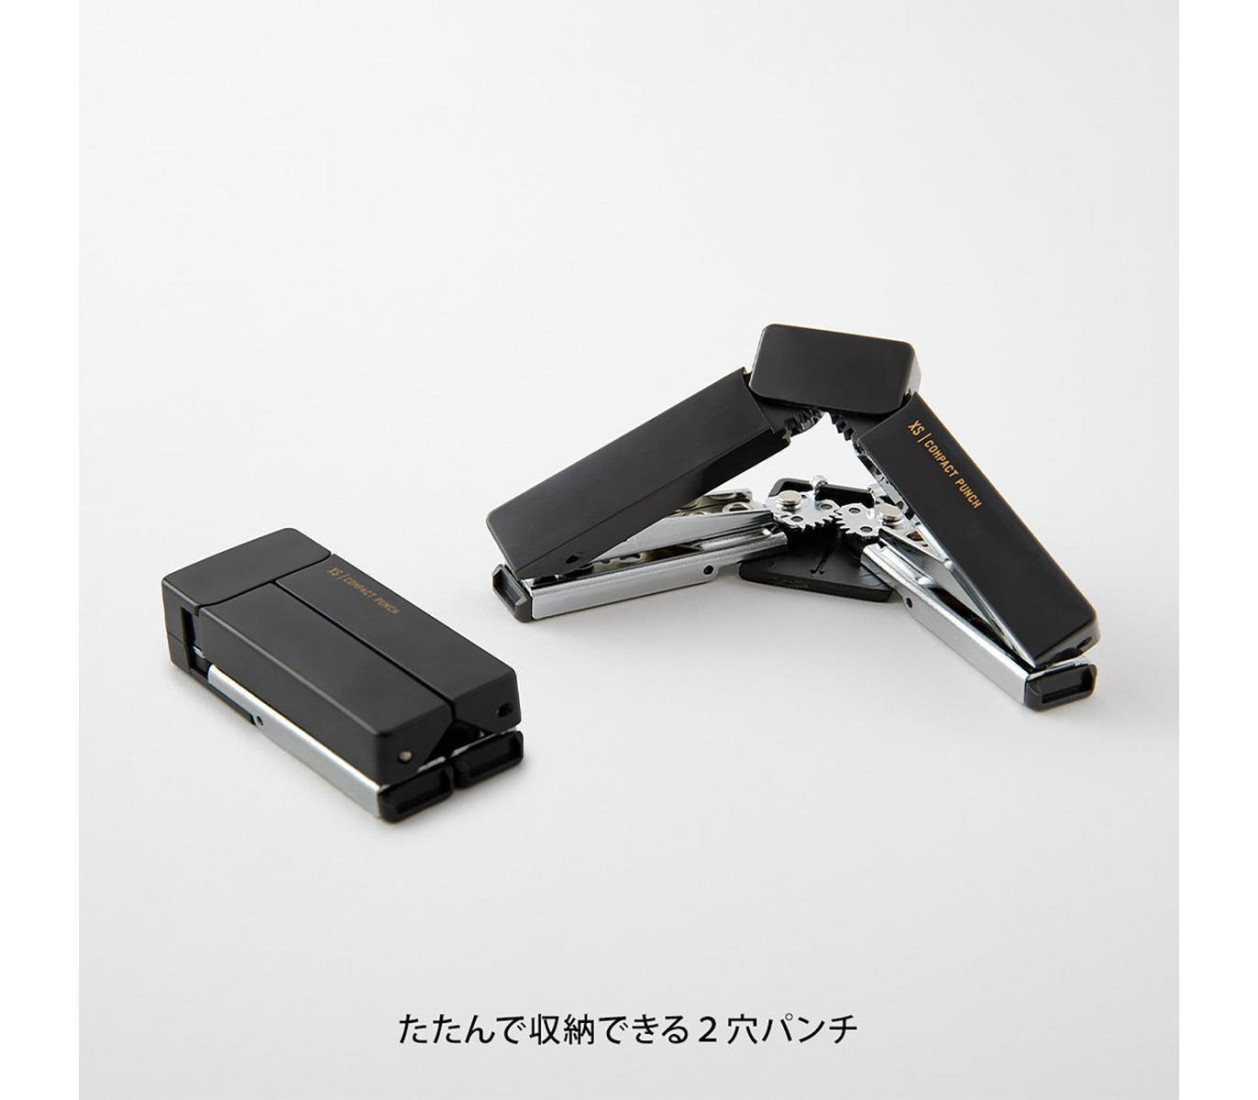 Midori XS (extra small) Compact Punch Black 35544006